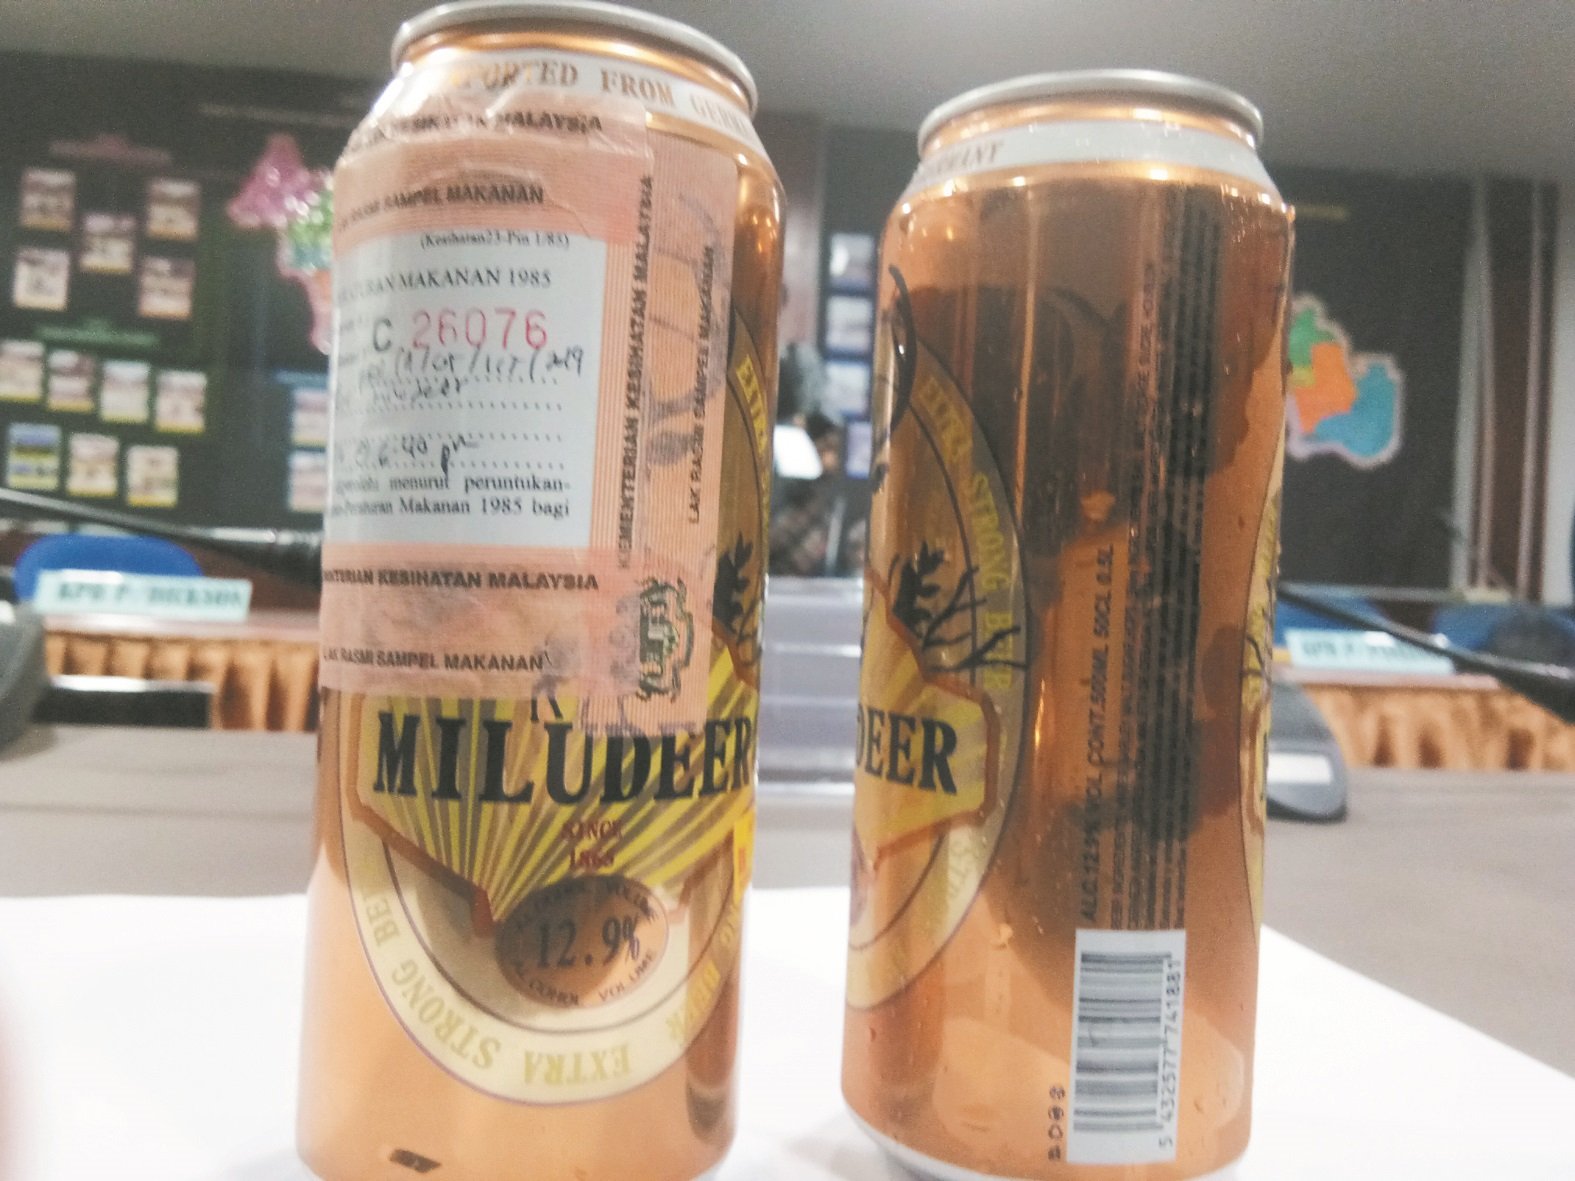 “Miludeer”酒罐上并没有注明生产地及地址等资料，惟扫瞄二维码后却会显示一组号码及两个地点。